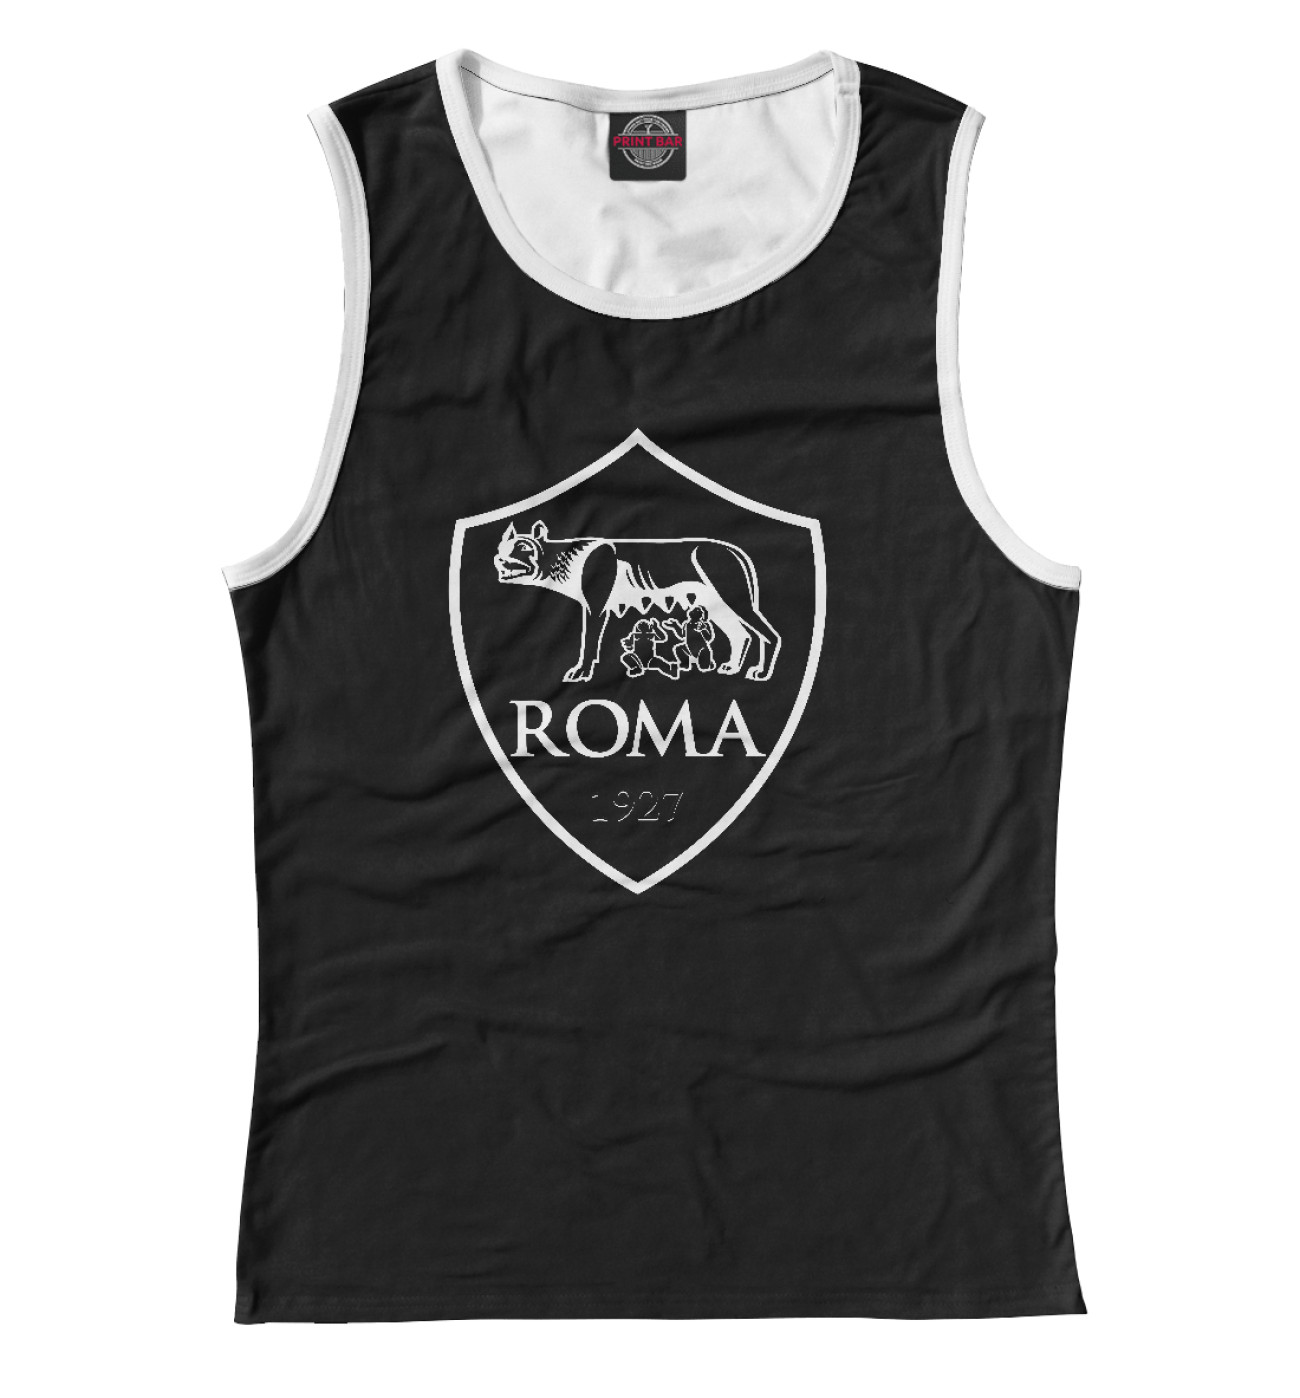 Женская Майка FC ROMA Black&White, артикул: FTO-315326-may-1